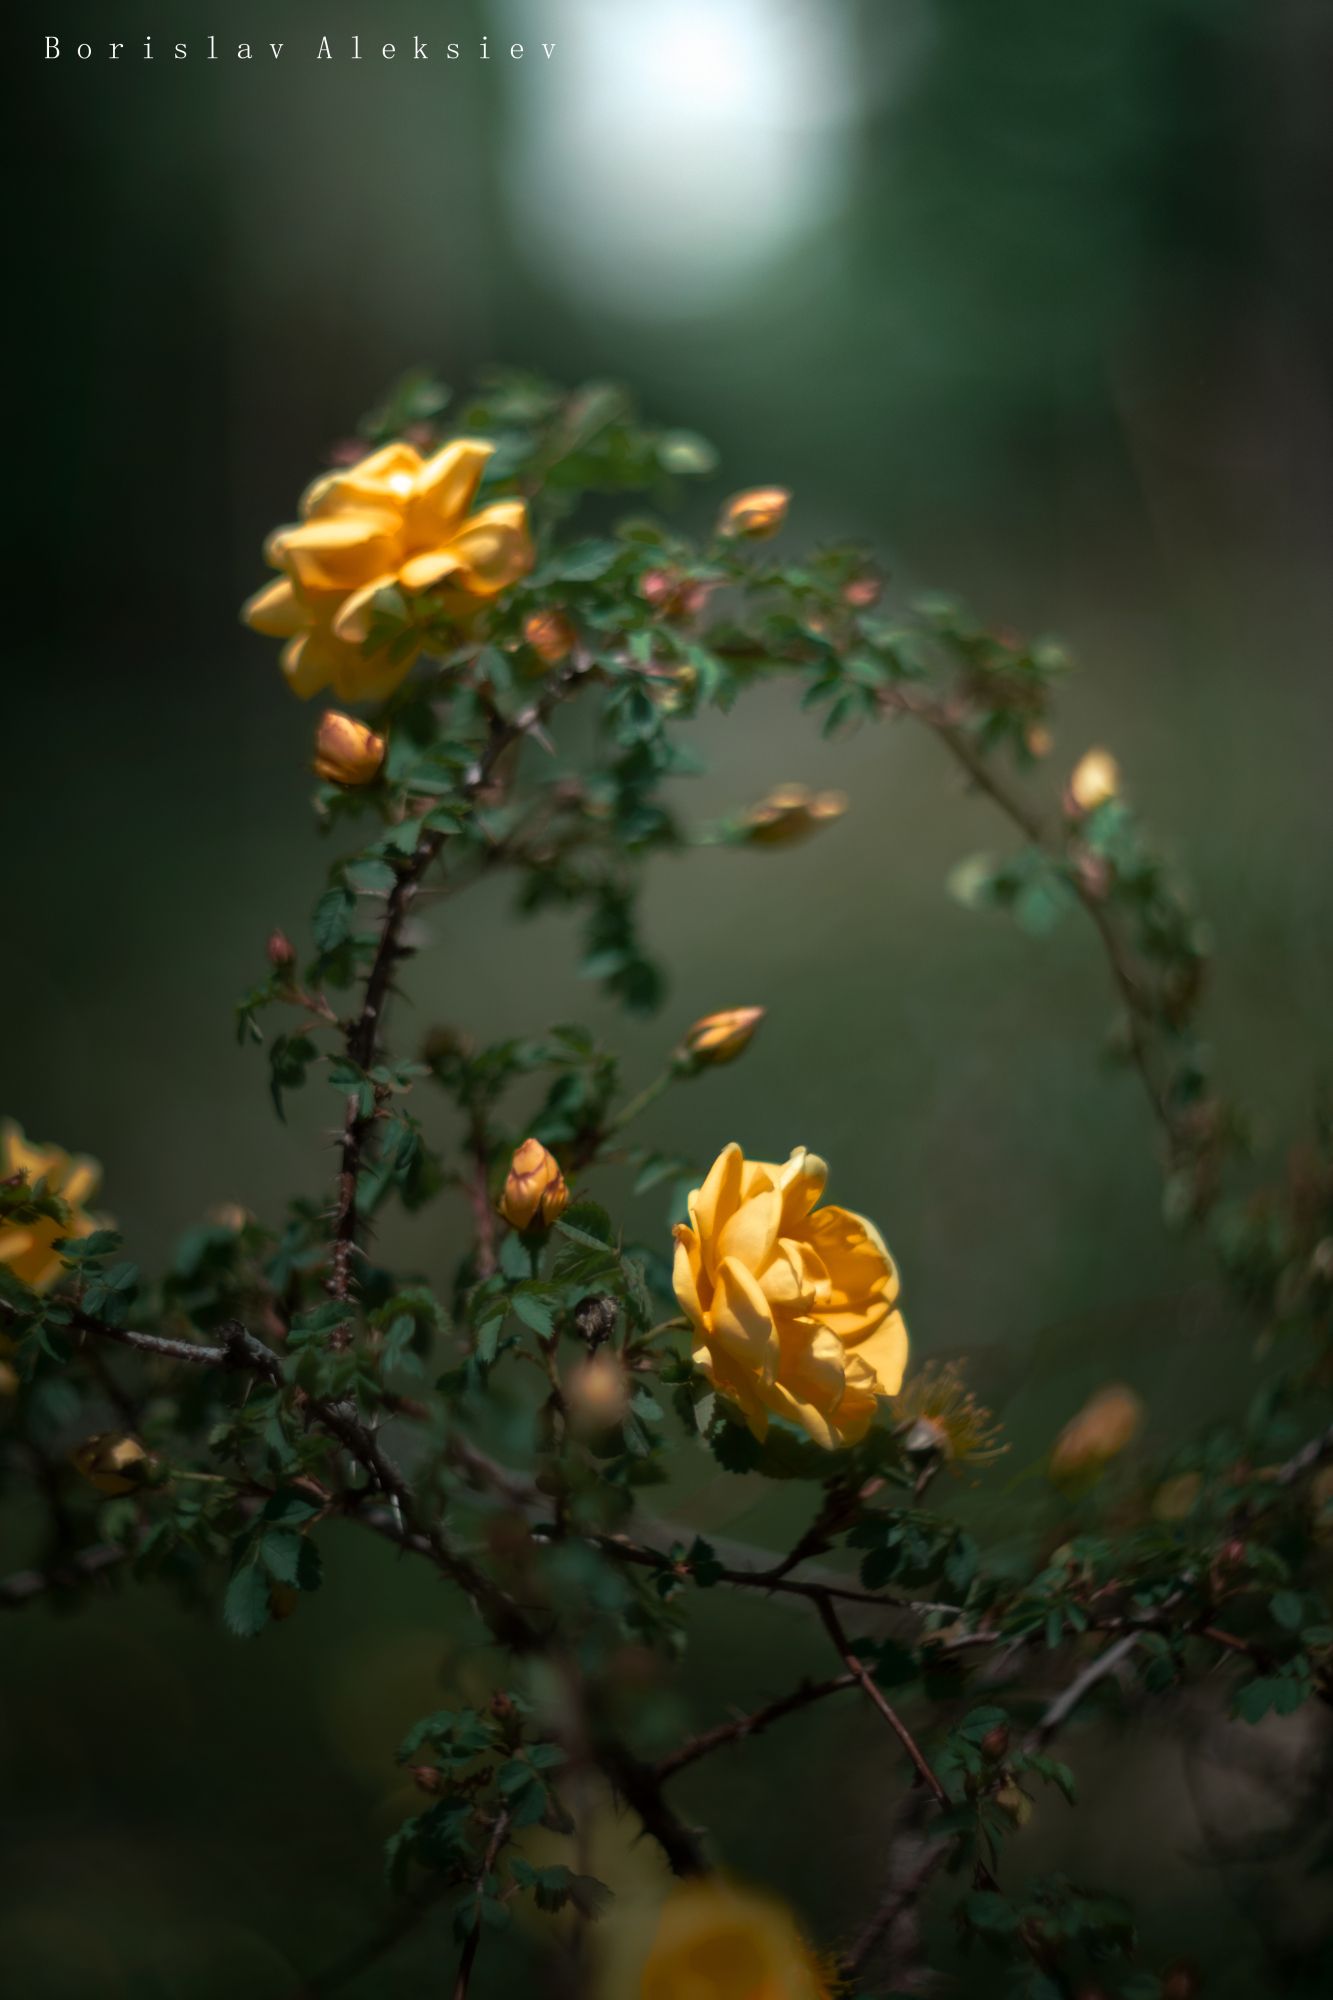 flowers,yellow,green,roses,bokeh,nature,light,green, Борислав Алексиев